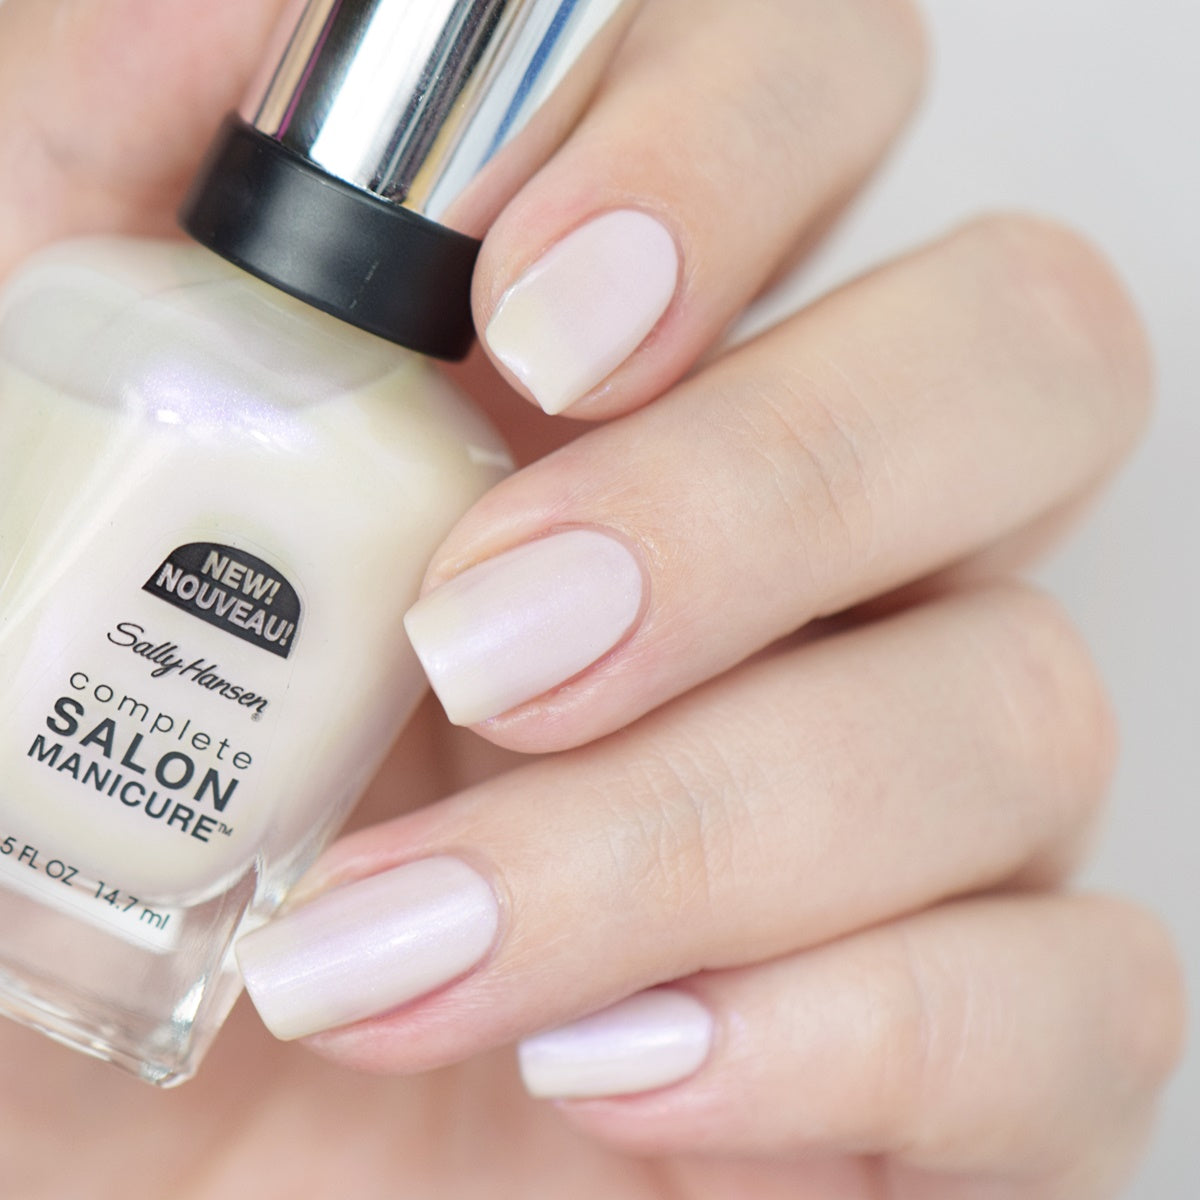 SALLY HANSEN Complete Salon Manicure Nail Color